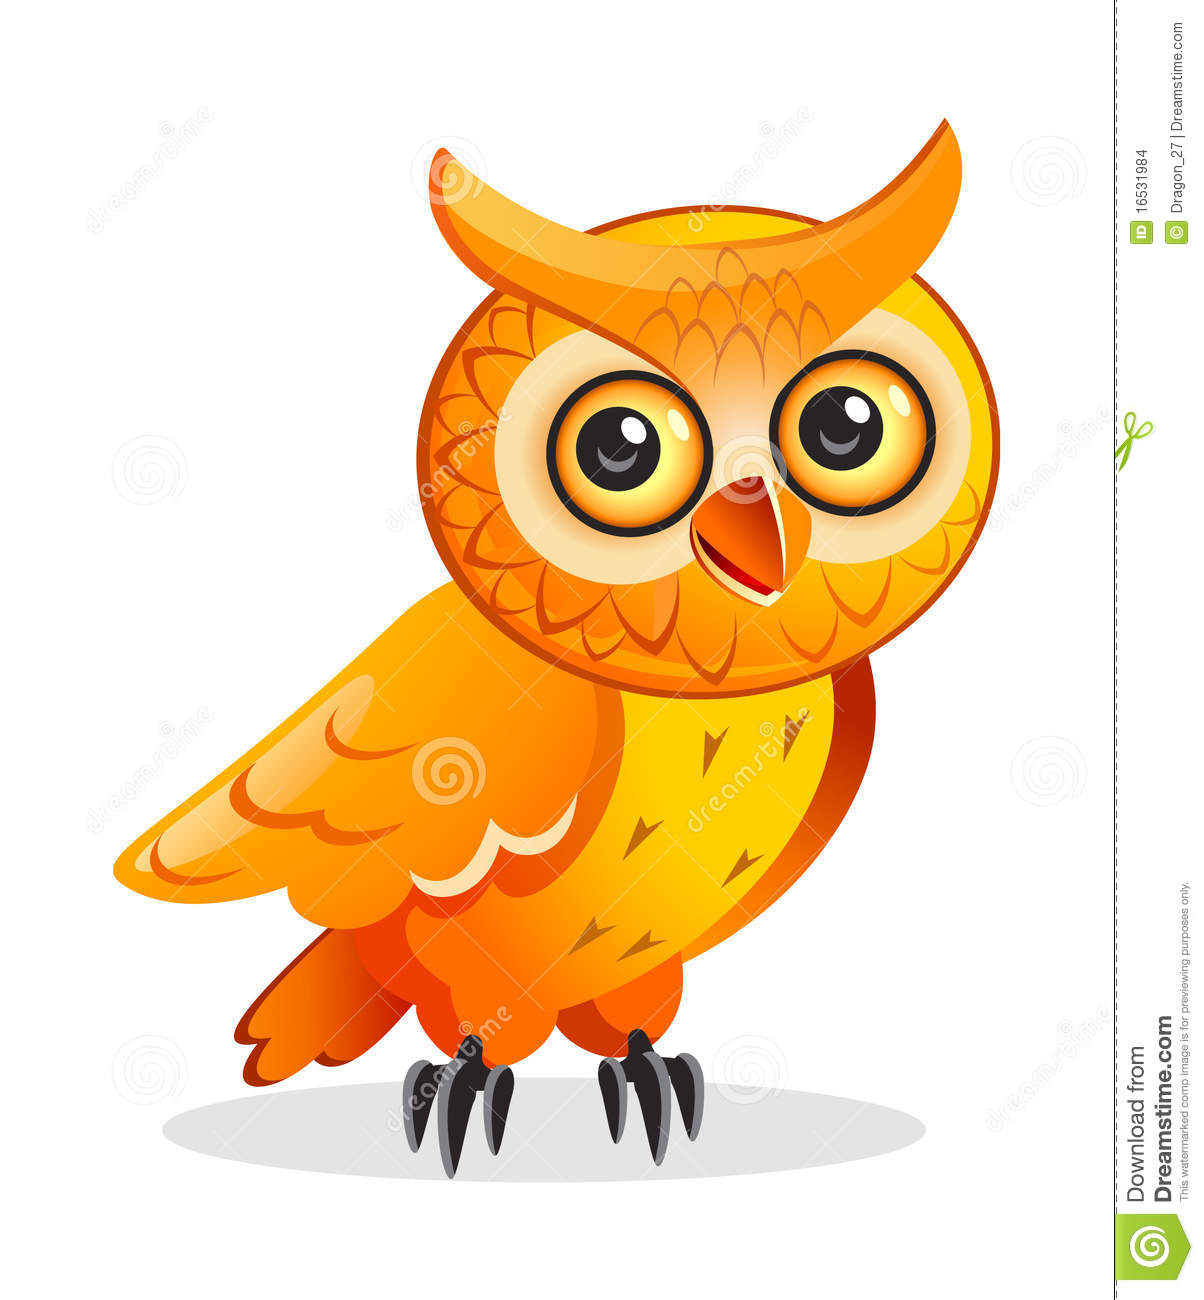 Owl Cartoon Image Wallpaper High Definition